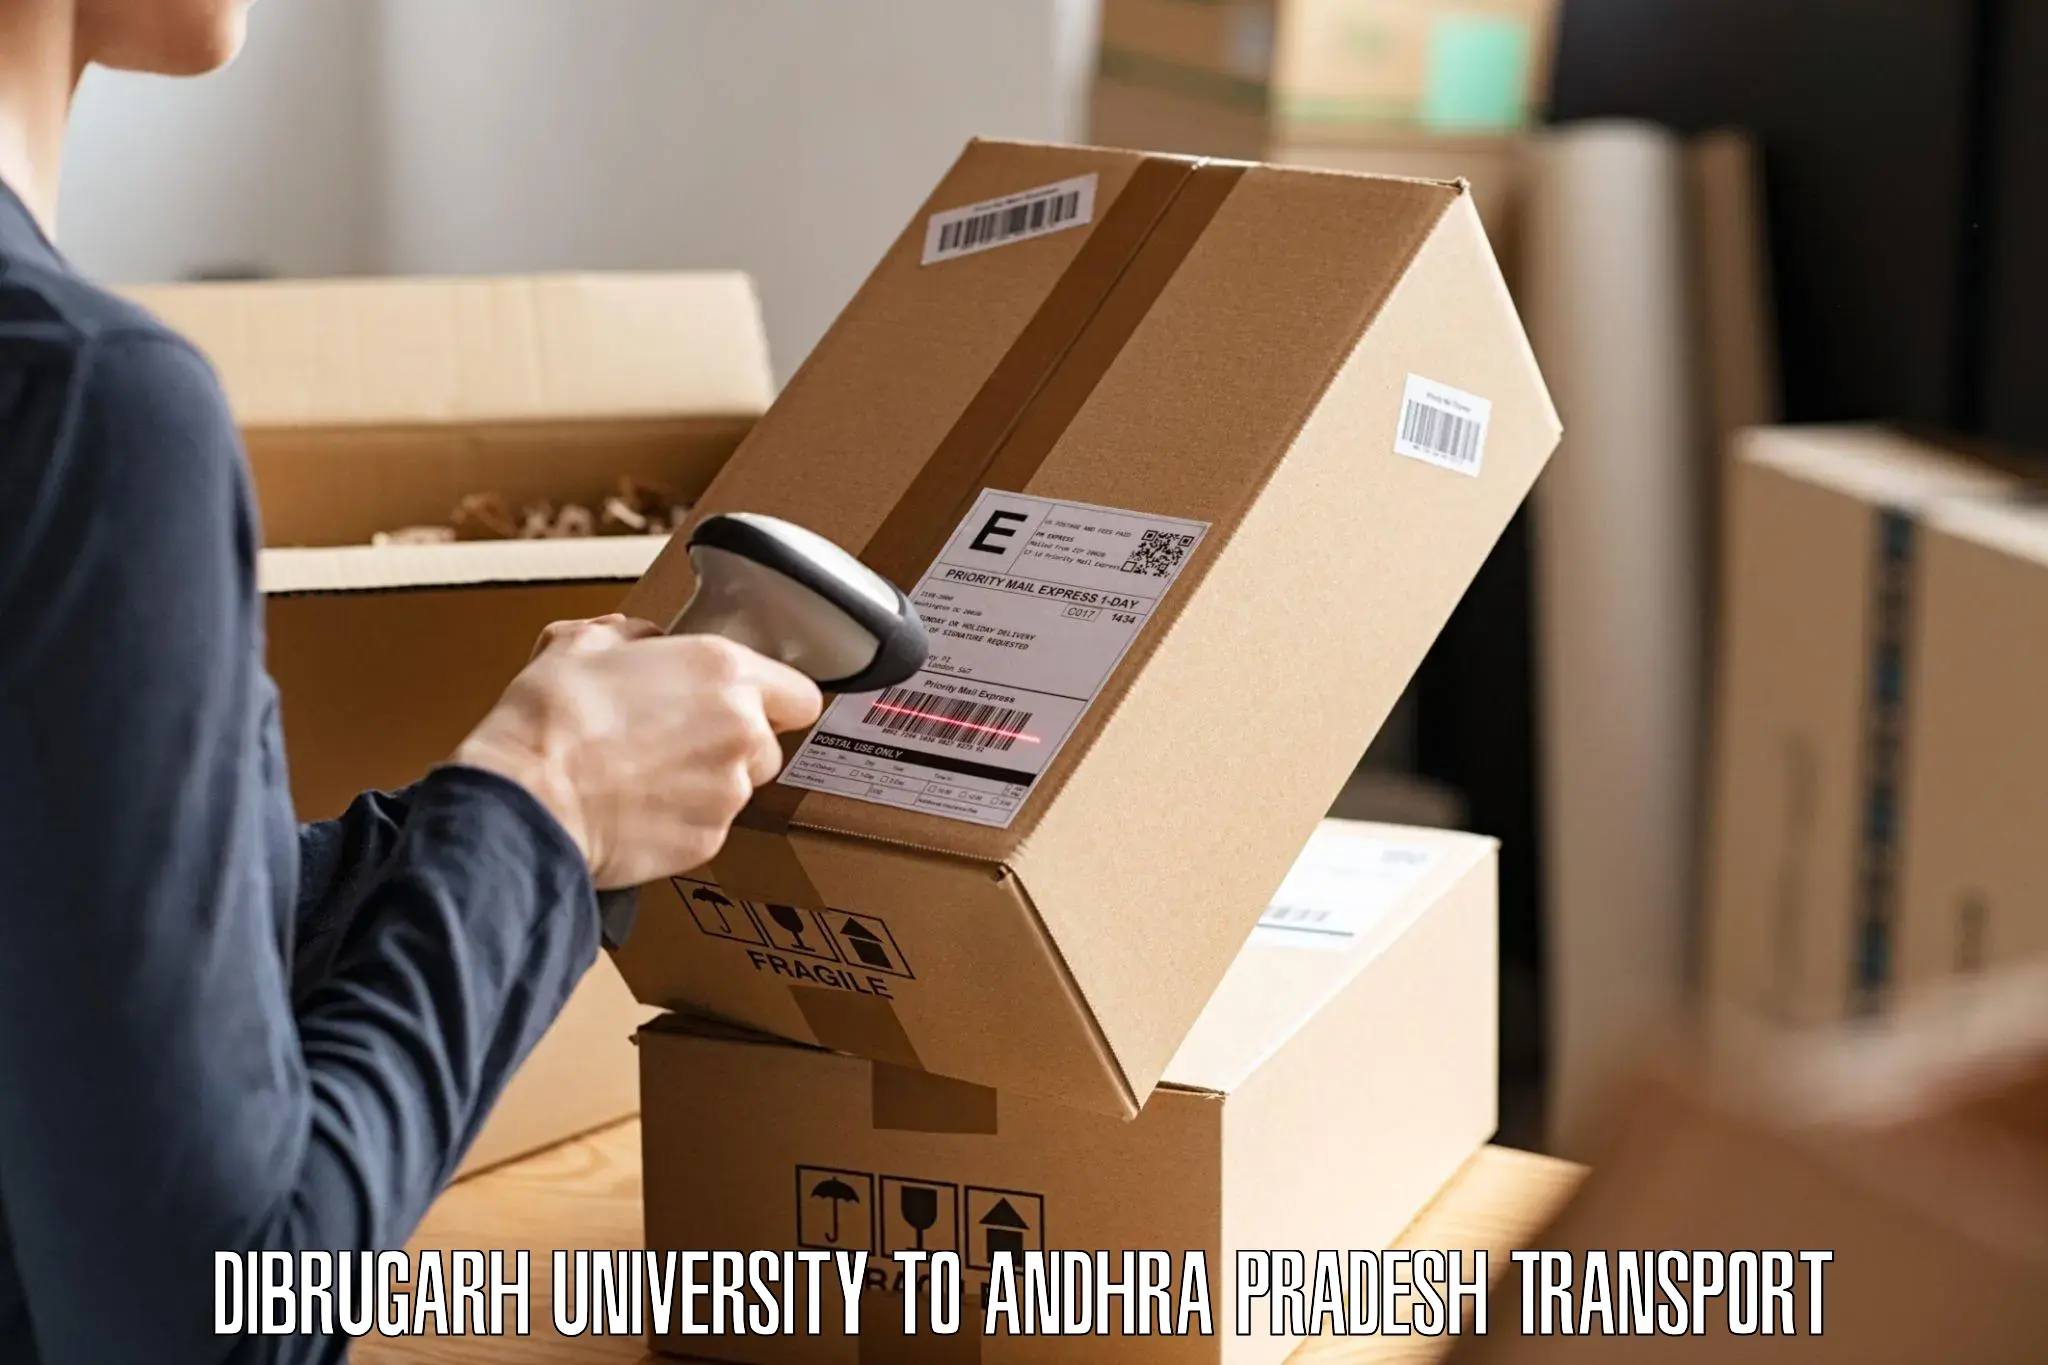 Furniture transport service in Dibrugarh University to Vempalli